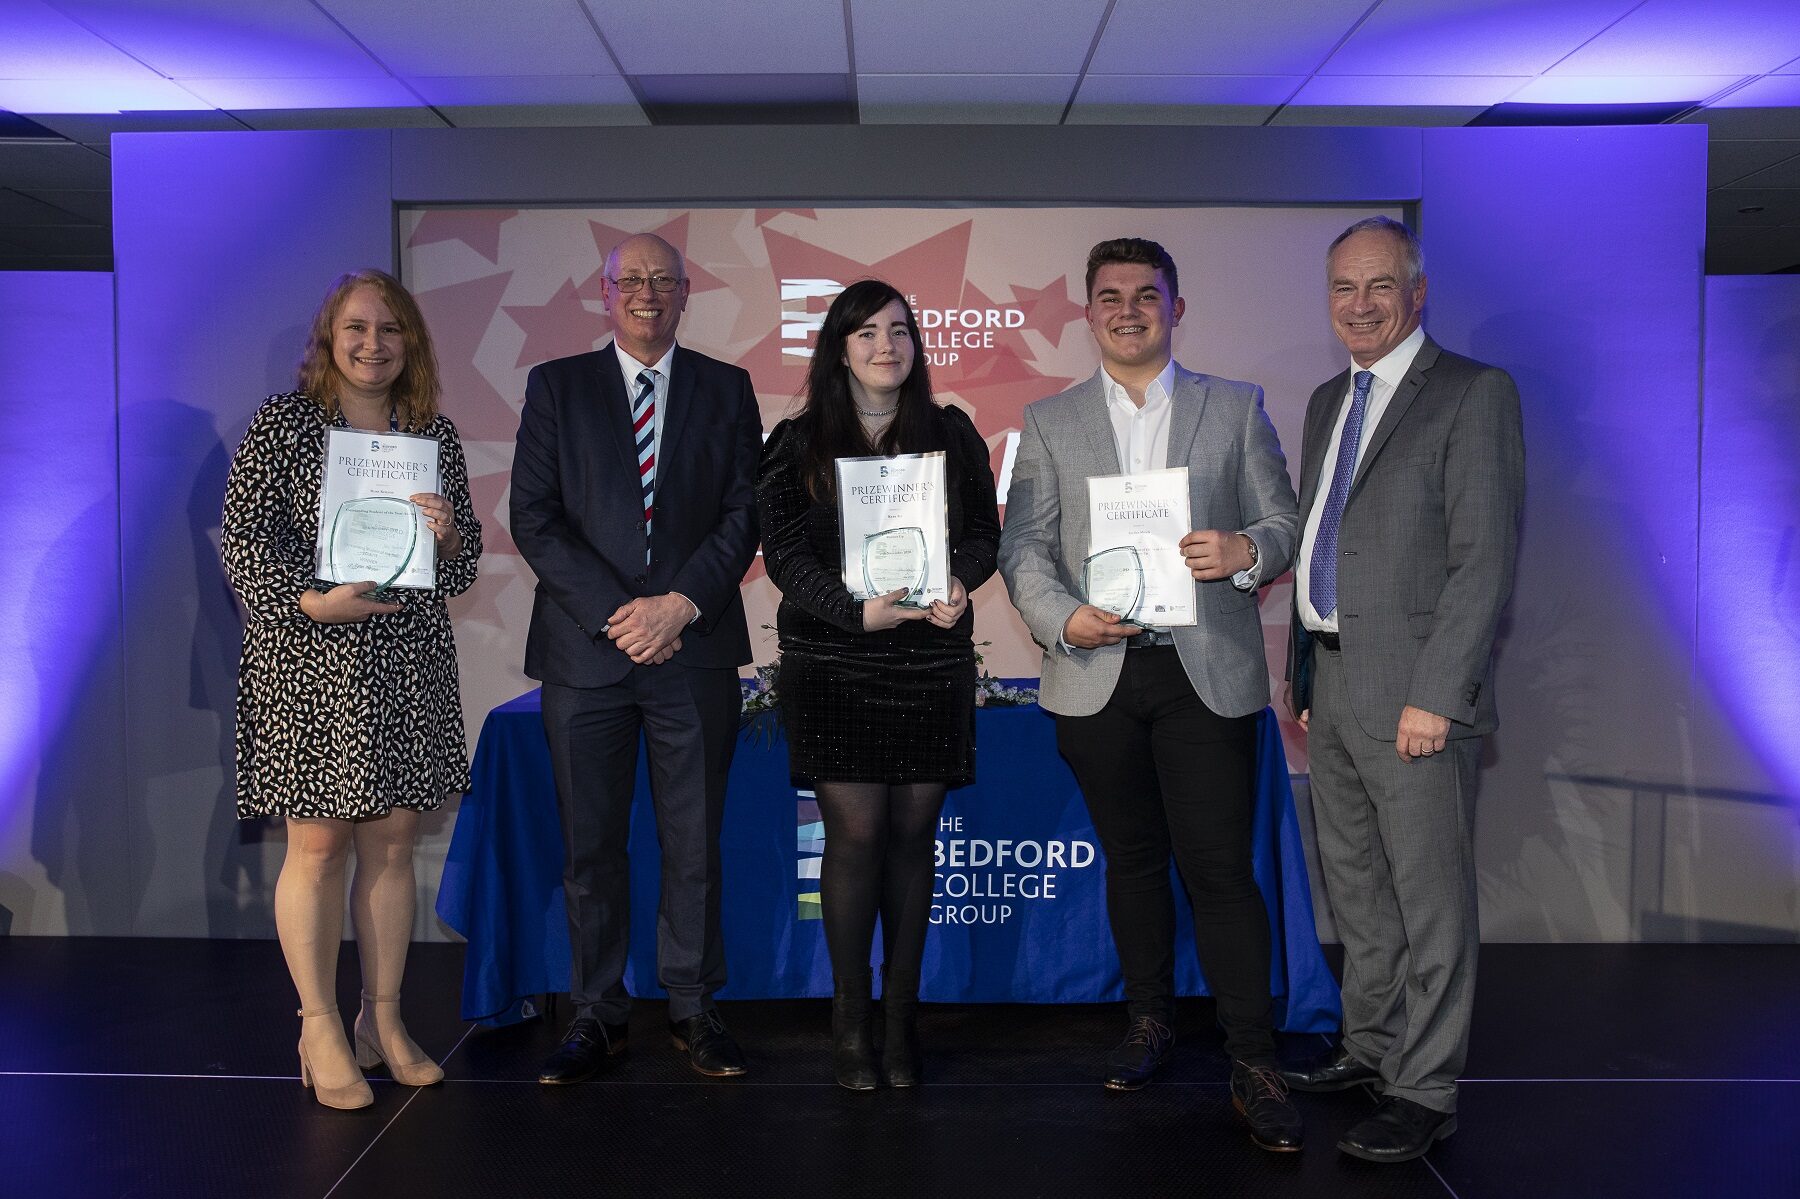 Tresham College Achievements Ceremony 2019